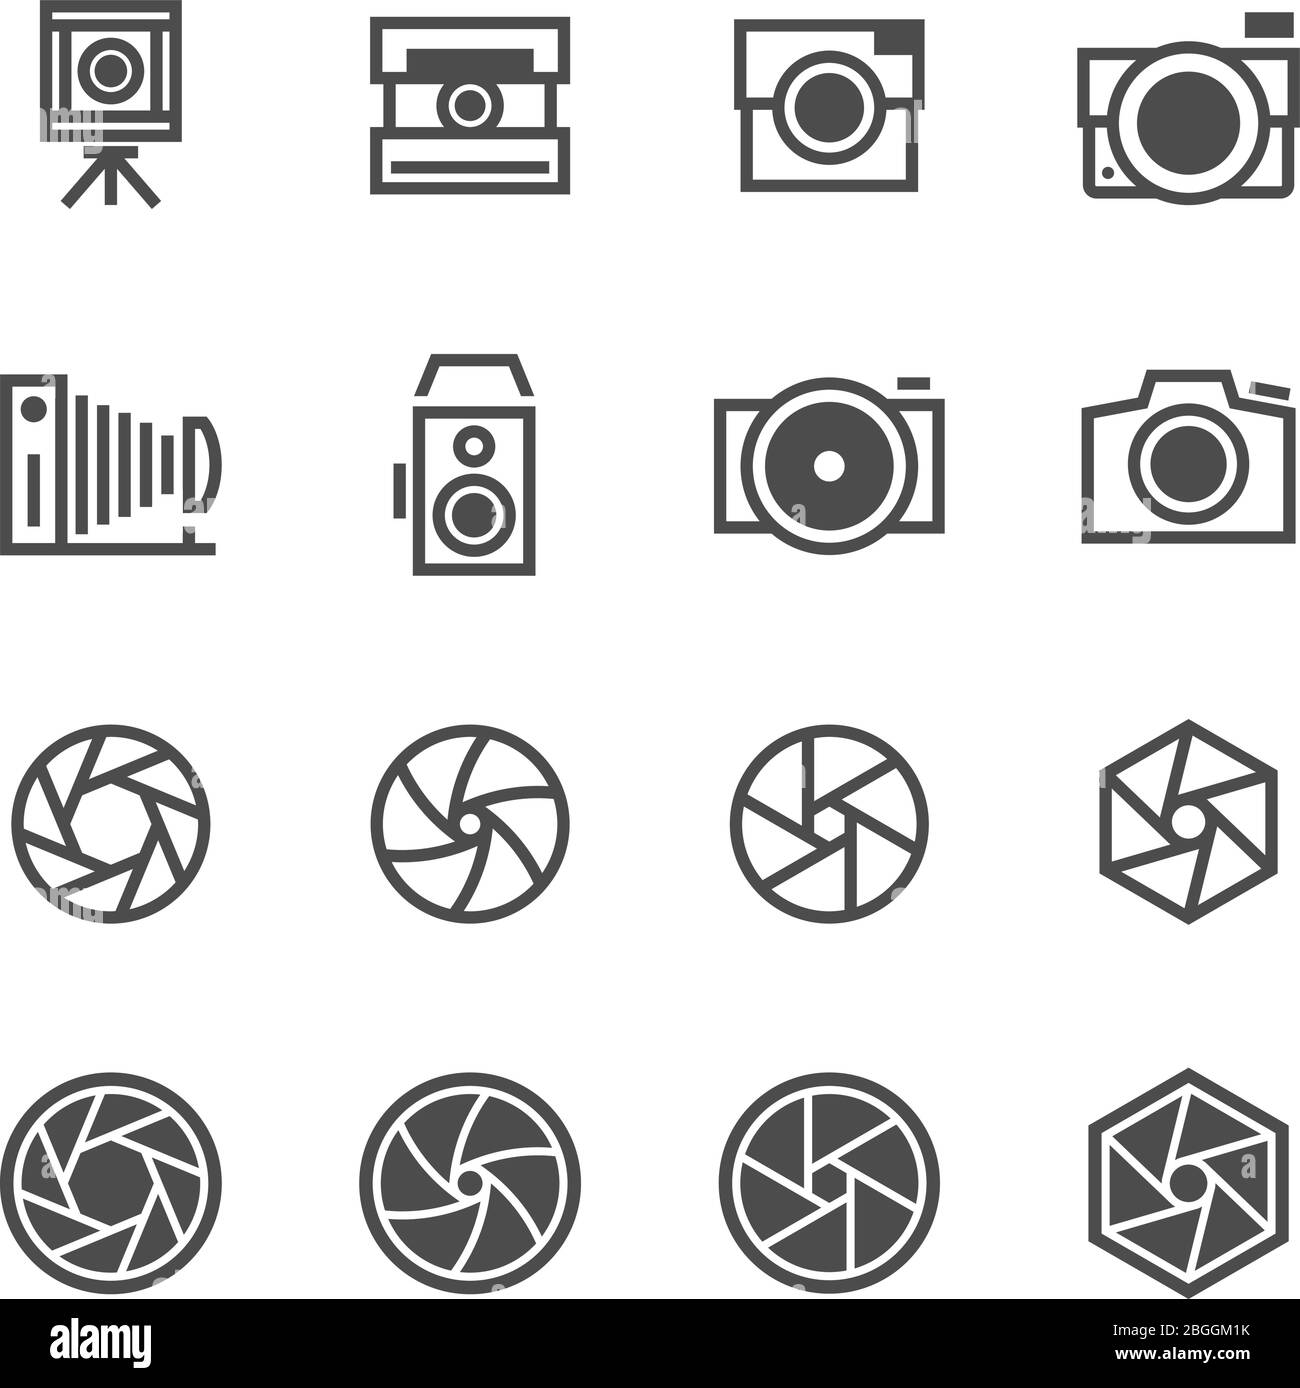 Photo camera, camcorder, photographer icons. Objective capture focus, aperture black silhouette symbols isolated. Equipment focus frame lens, shutter camera illustration Stock Vector